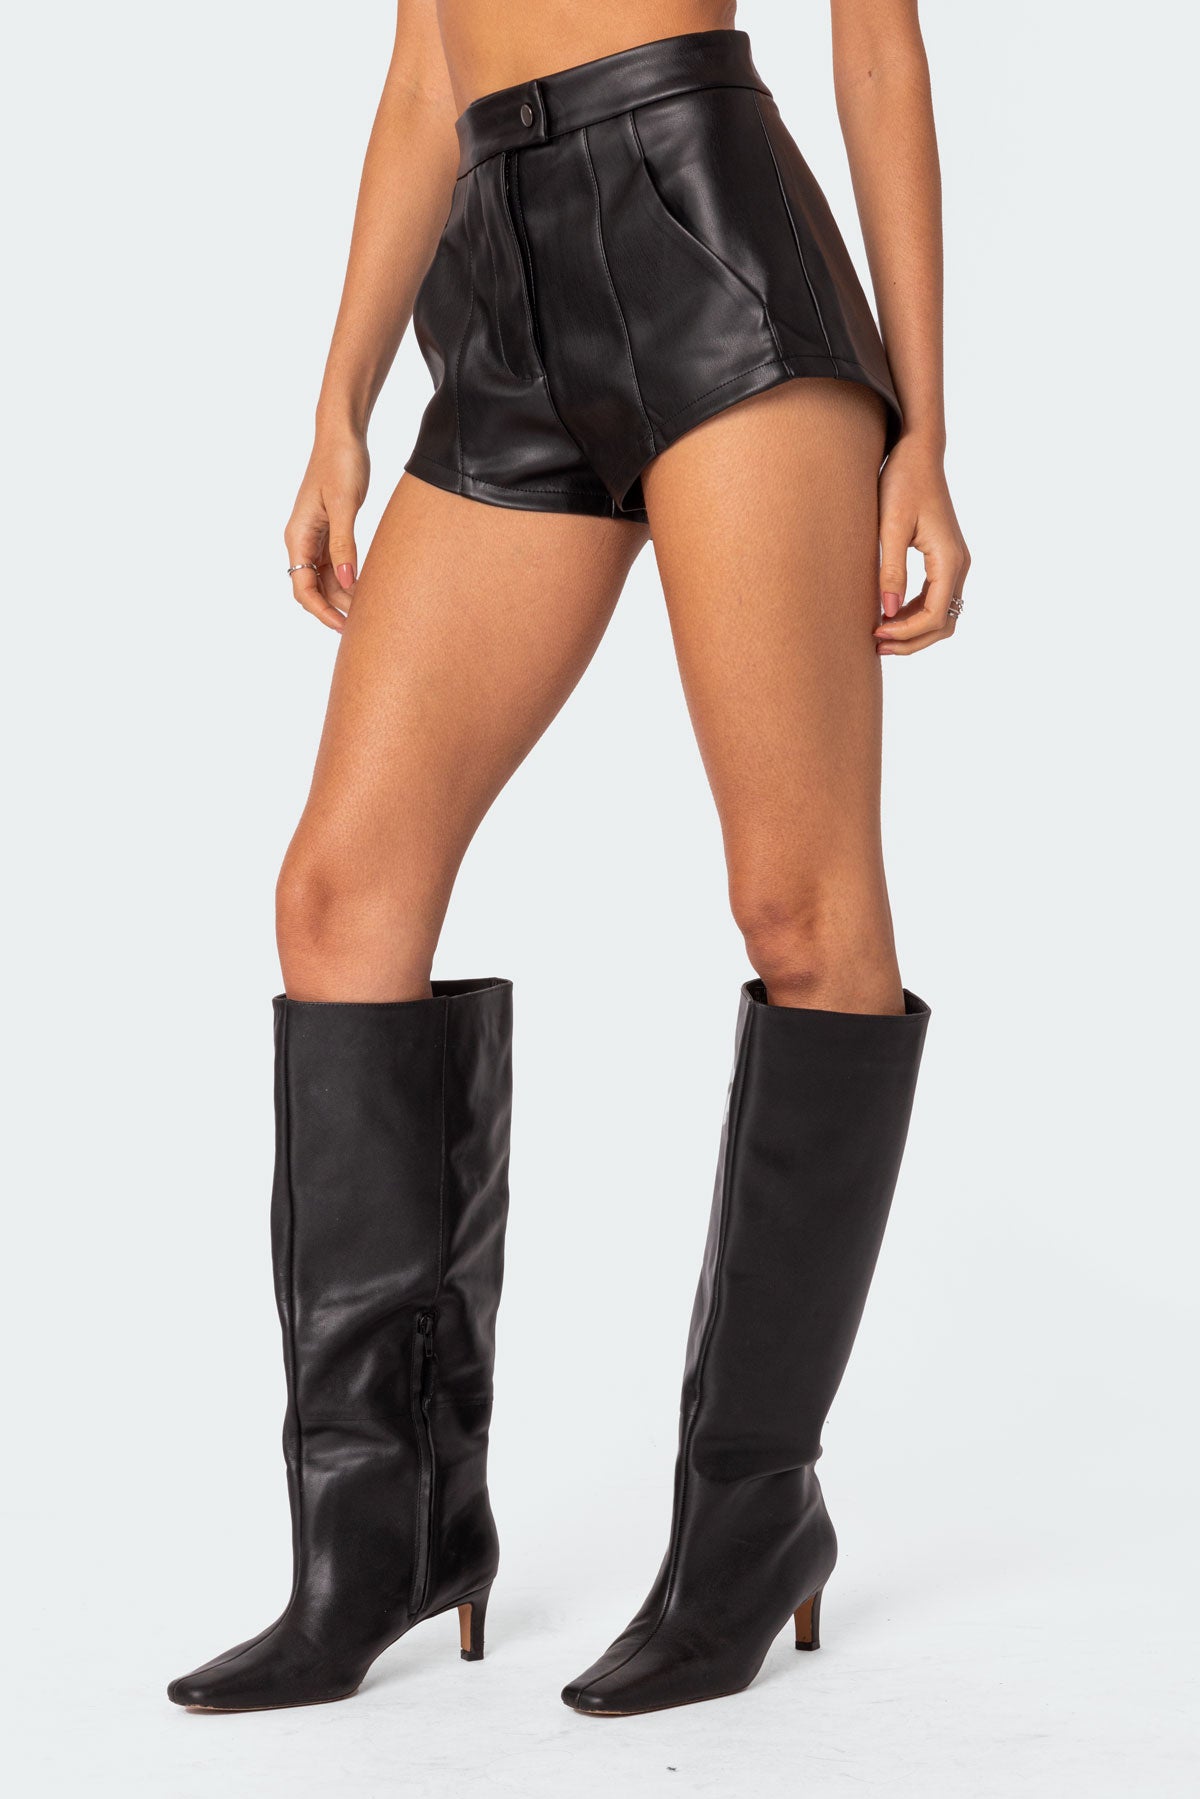 Ramona High Rise Faux Leather Micro Shorts